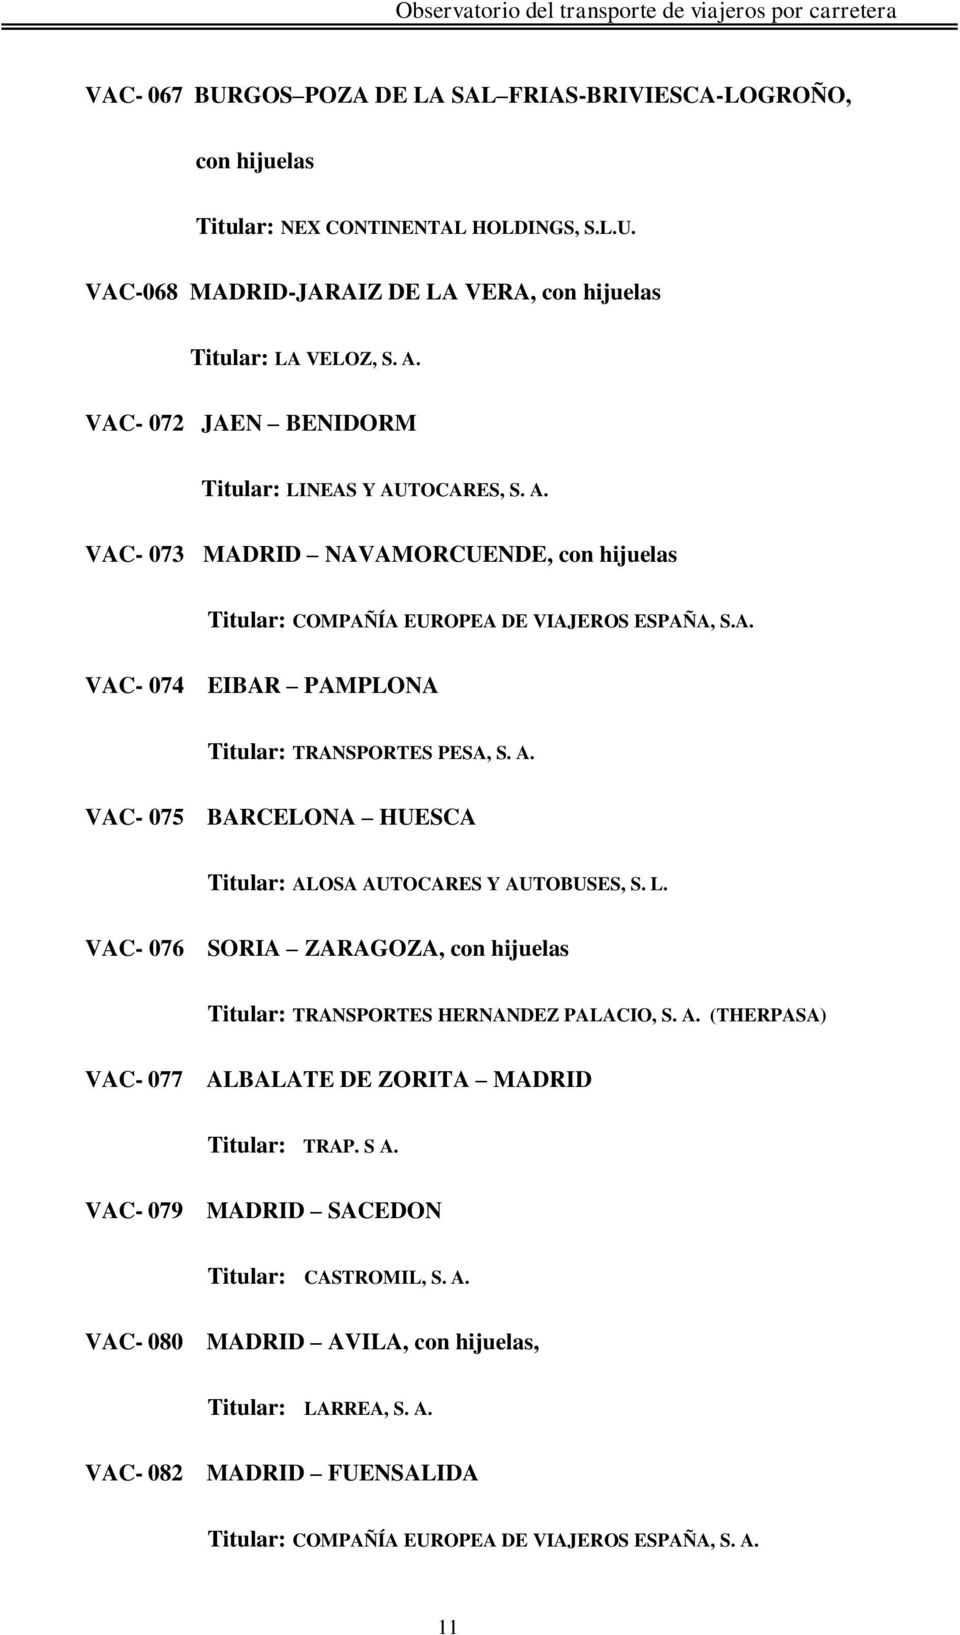 A. VAC- 075 BARCELONA HUESCA Titular: ALOSA AUTOCARES Y AUTOBUSES, S. L. VAC- 076 SORIA ZARAGOZA, con hijuelas Titular: TRANSPORTES HERNANDEZ PALACIO, S. A. (THERPASA) VAC- 077 ALBALATE DE ZORITA MADRID Titular: TRAP.